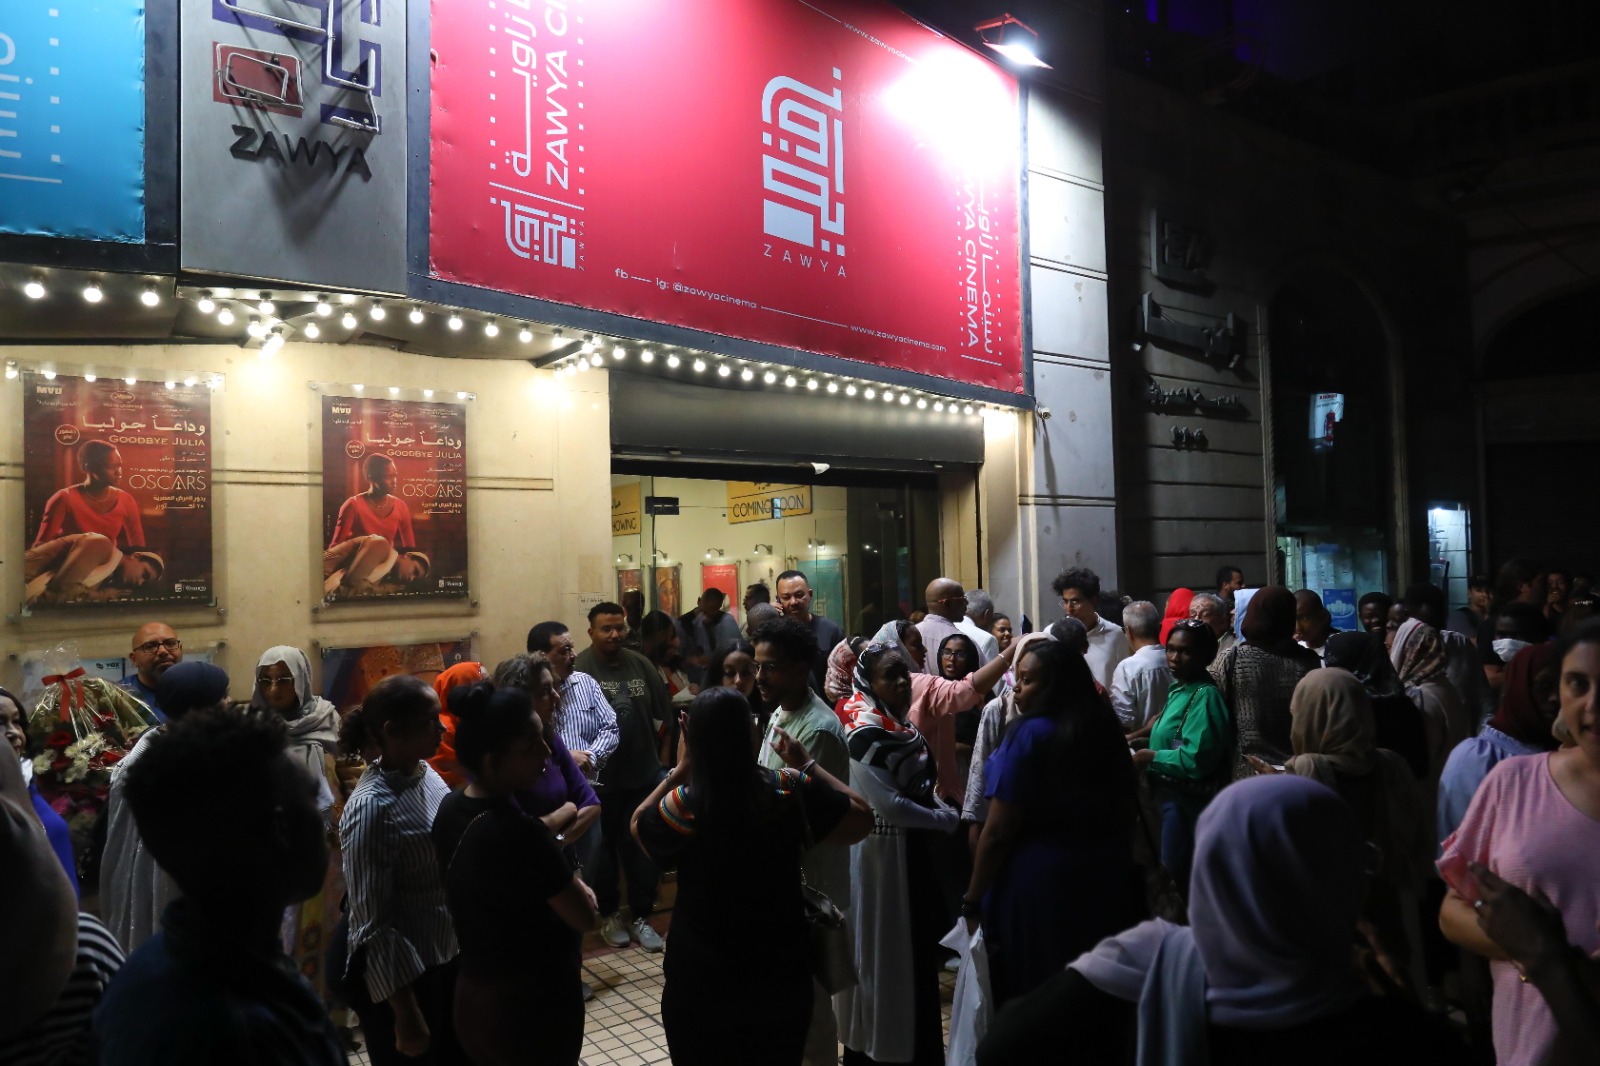 GOODBYE JULIA holds historic screening at Cairoâ€™s Zawya Cinema amid a stellar media presence